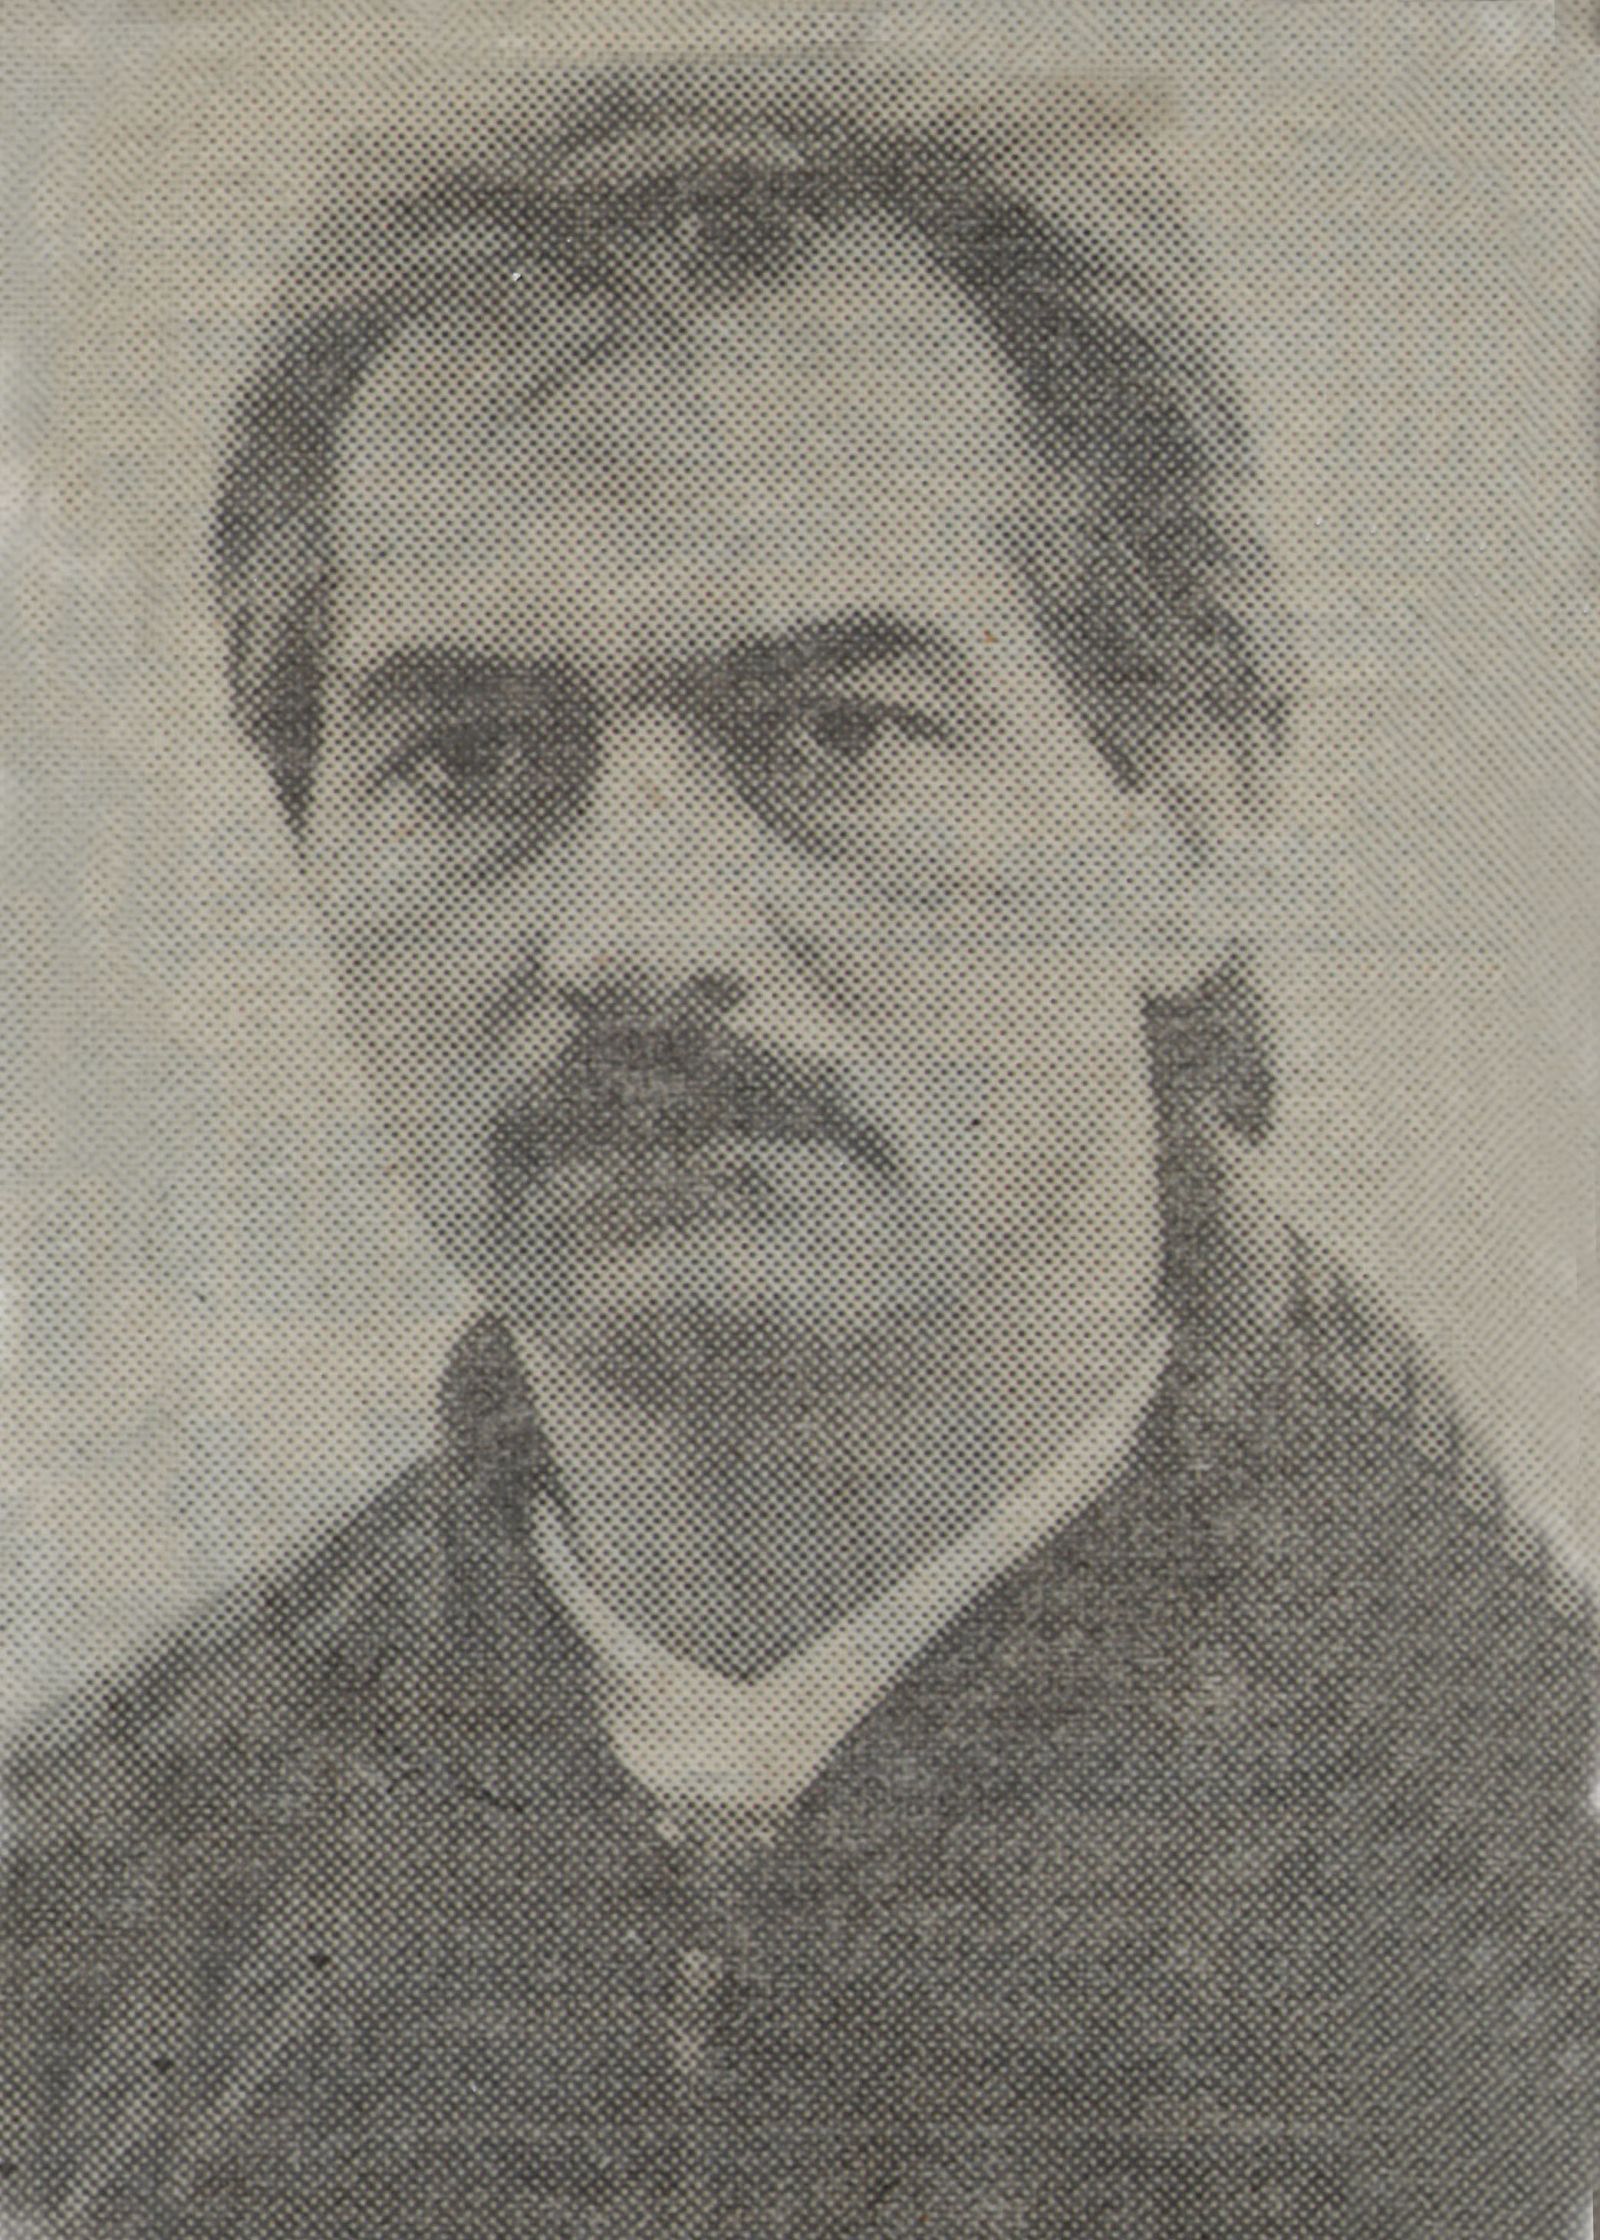 Heinz Tanzler (70)